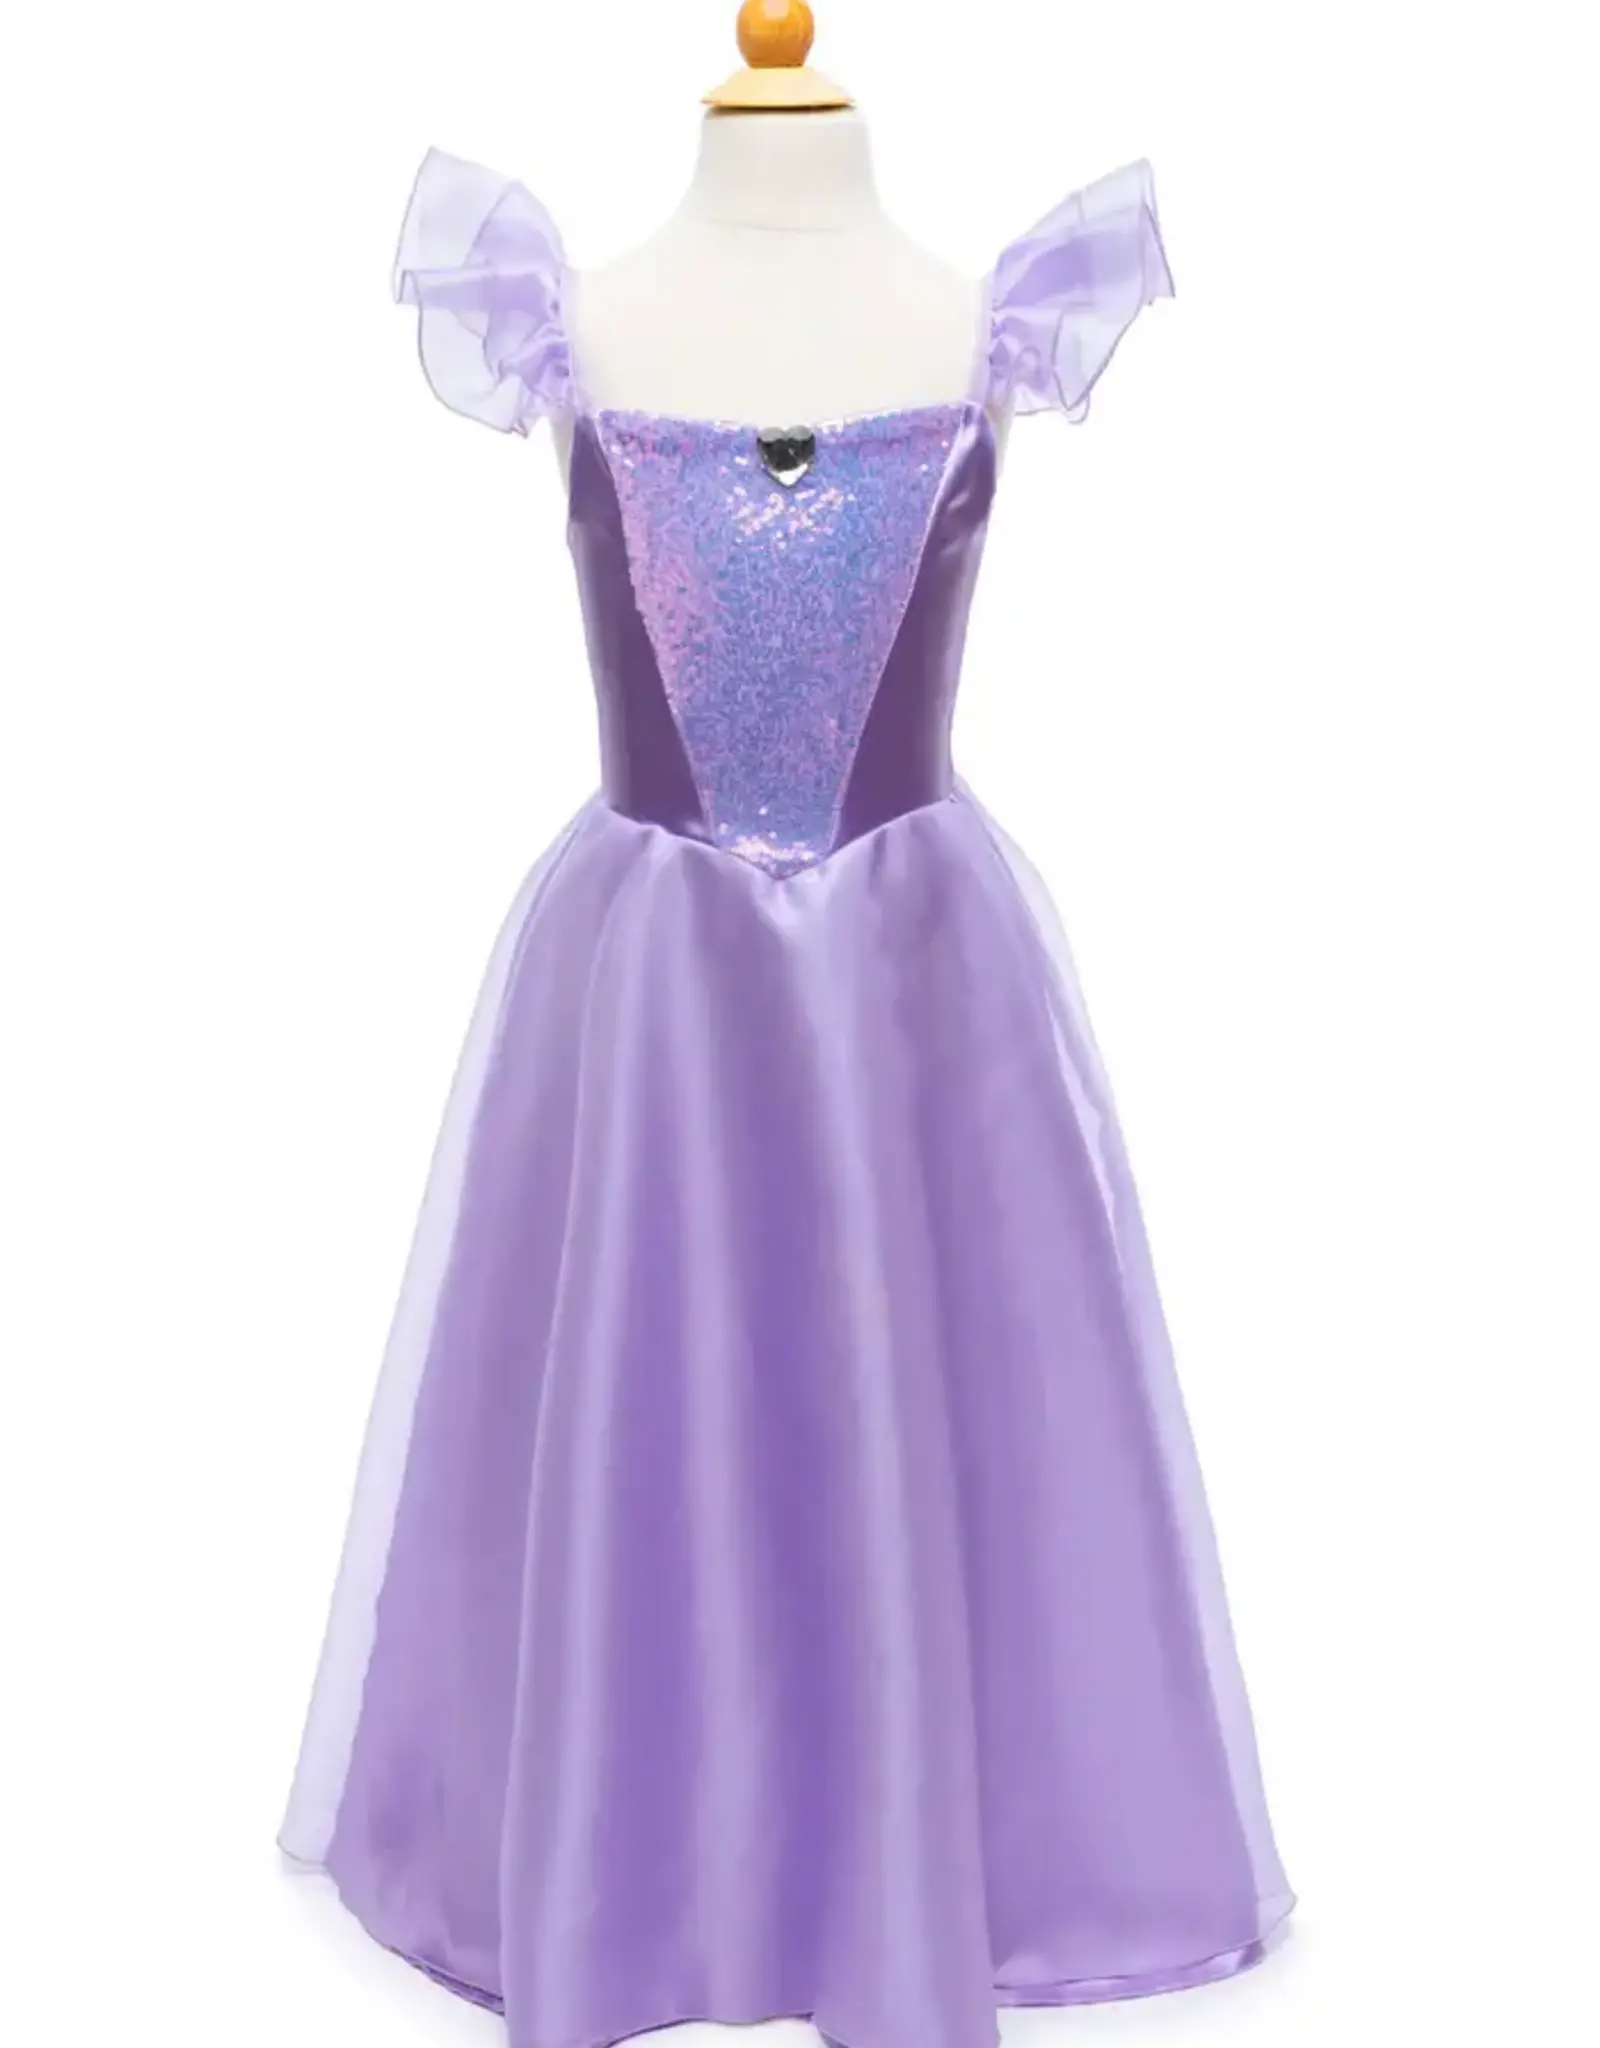 Creative Education Party Princess Dress, Lilac, Size 5-6